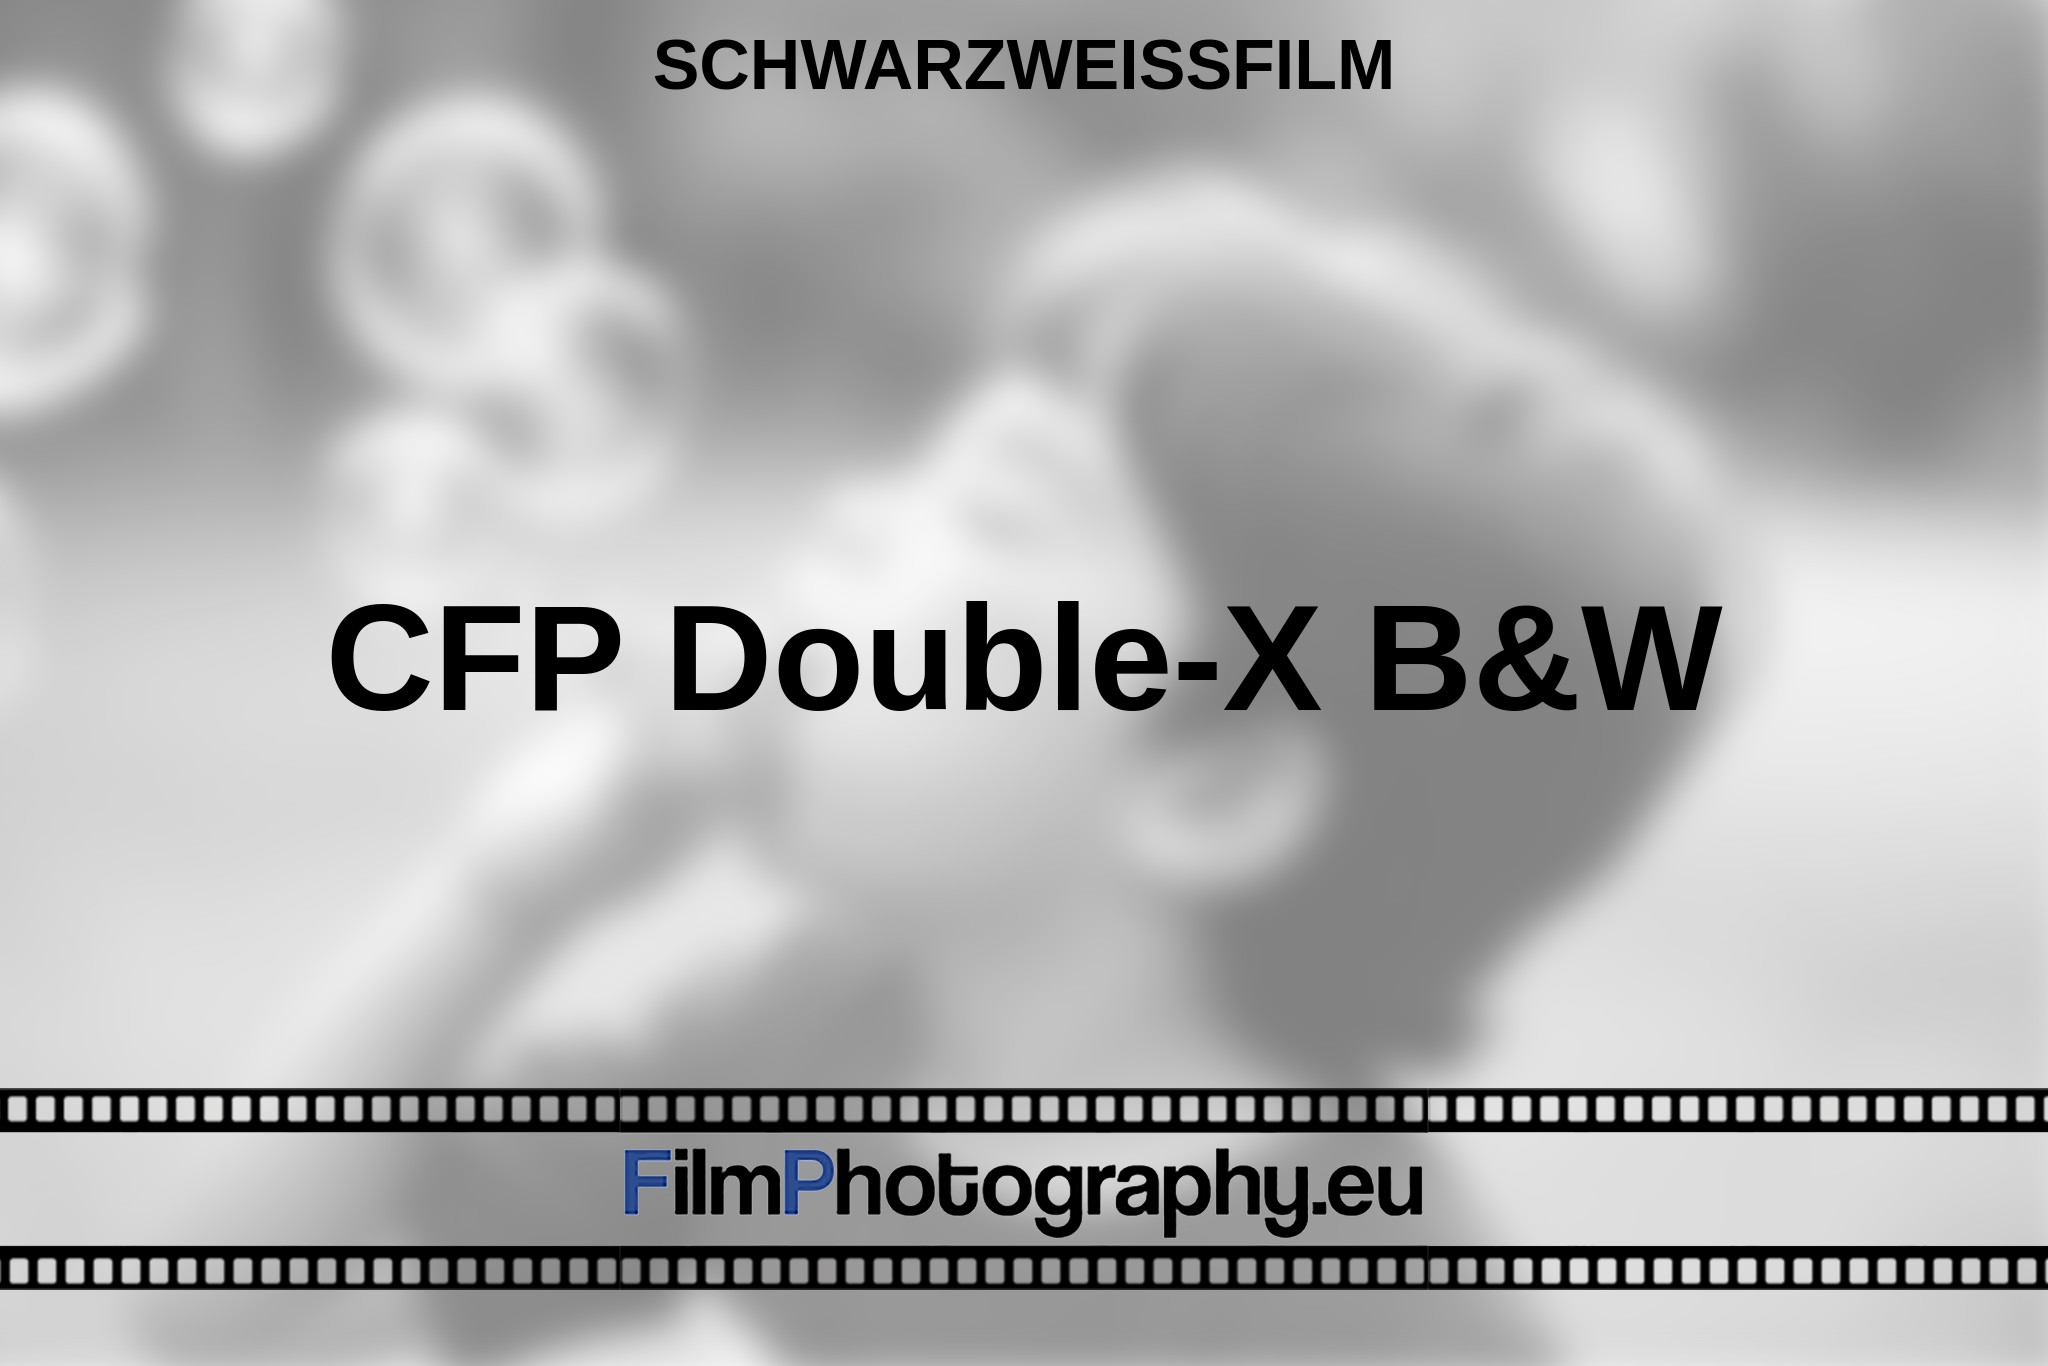 cfp-double-x-b-w-schwarzweißfilm-bnv.jpg